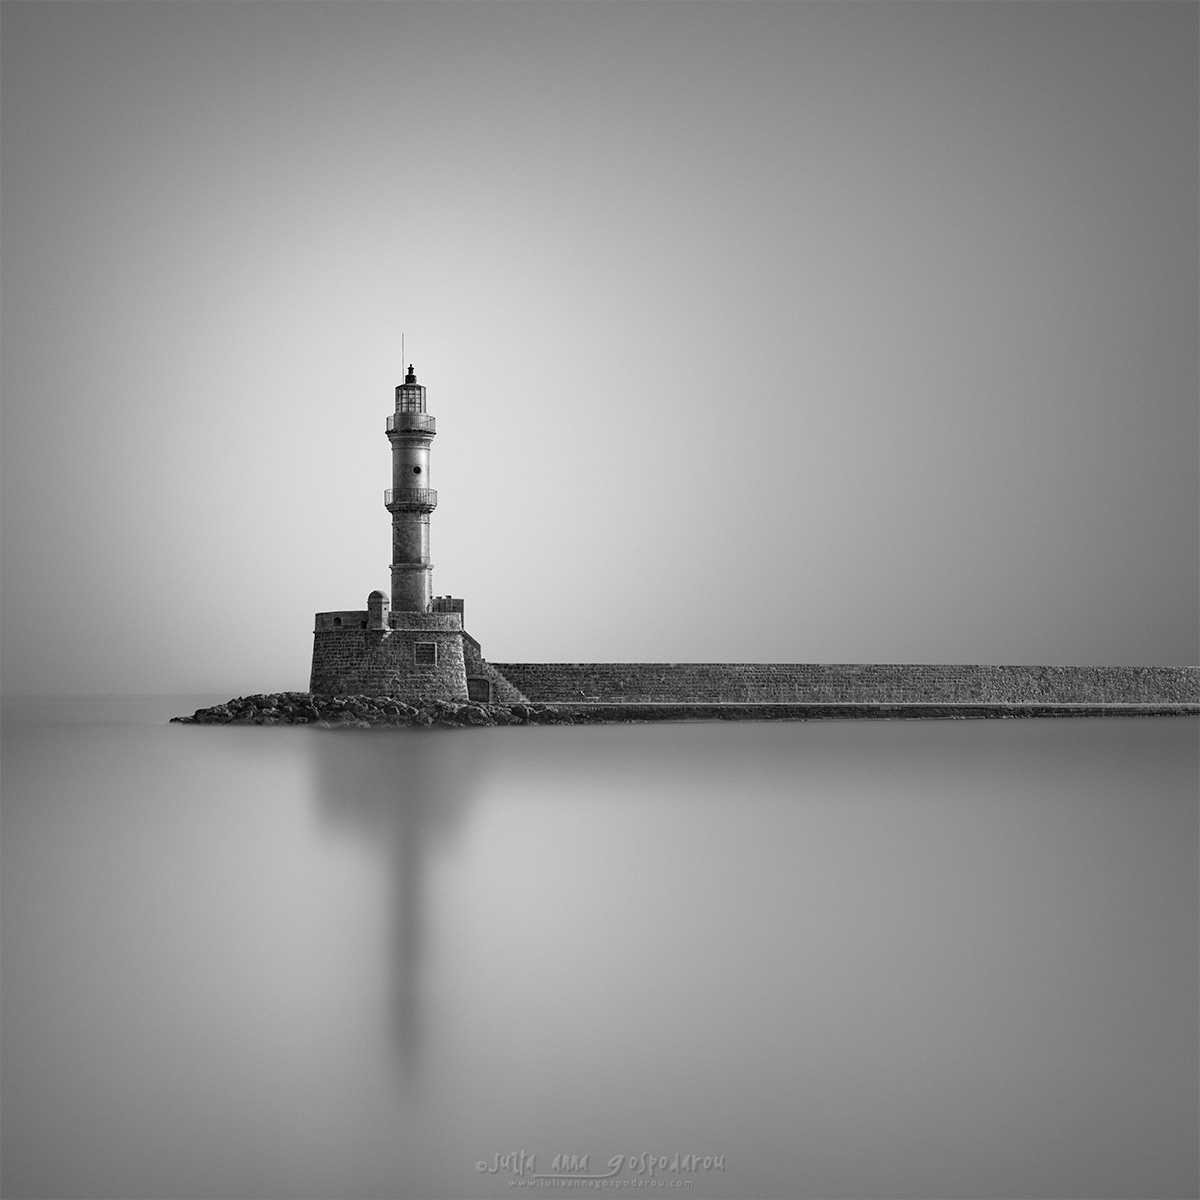 <center><p style="color:#FFFFFF;">Hope - © Julia Anna Gospodarou - Chania Lighthouse Greece seascape, Landscape</p></center>